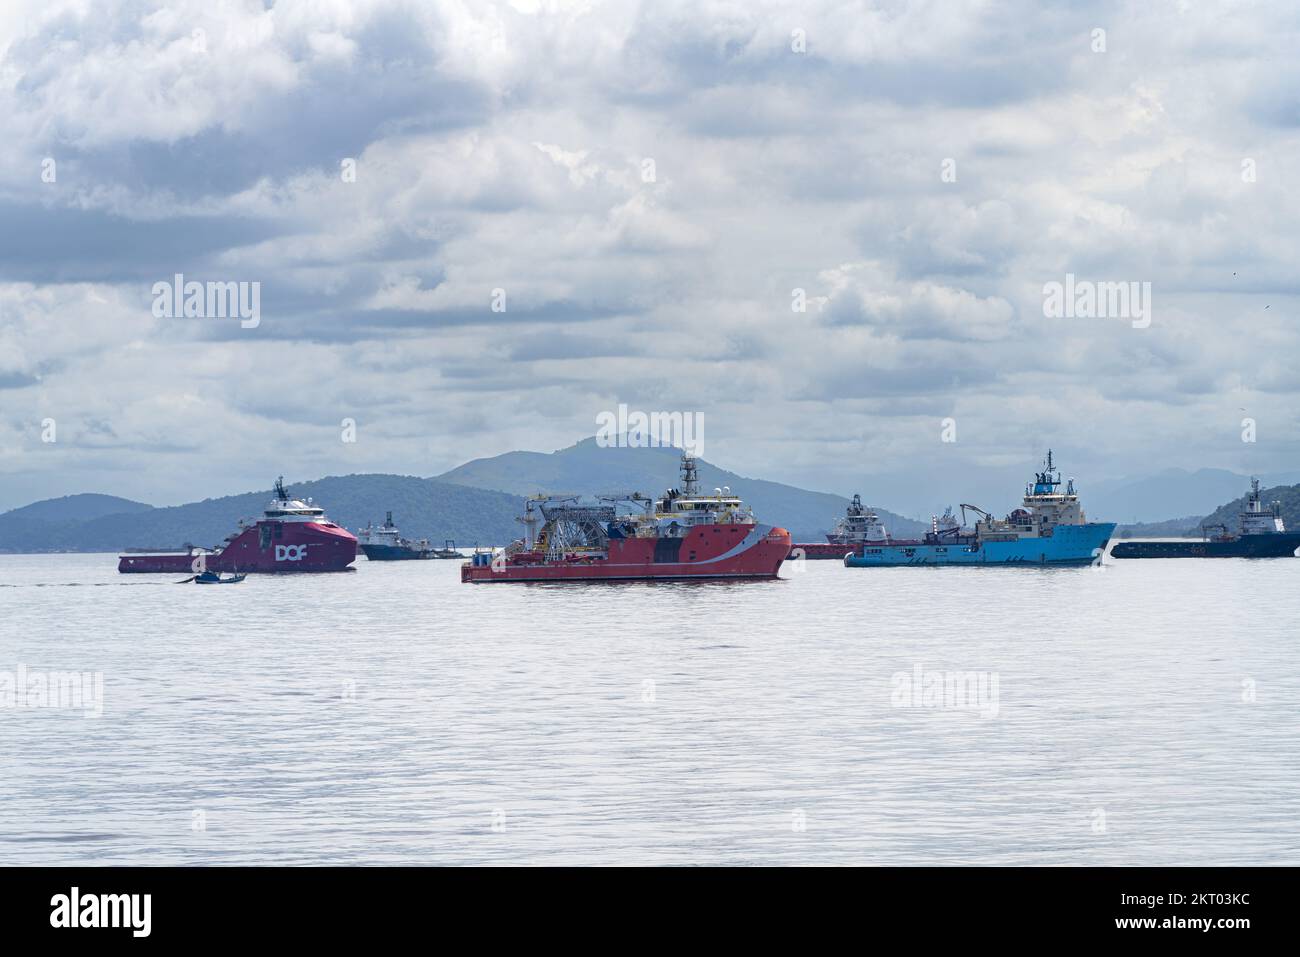 Vessels at anchor, Guanabara bay, Rio de Janeiro, Brazil Stock Photo